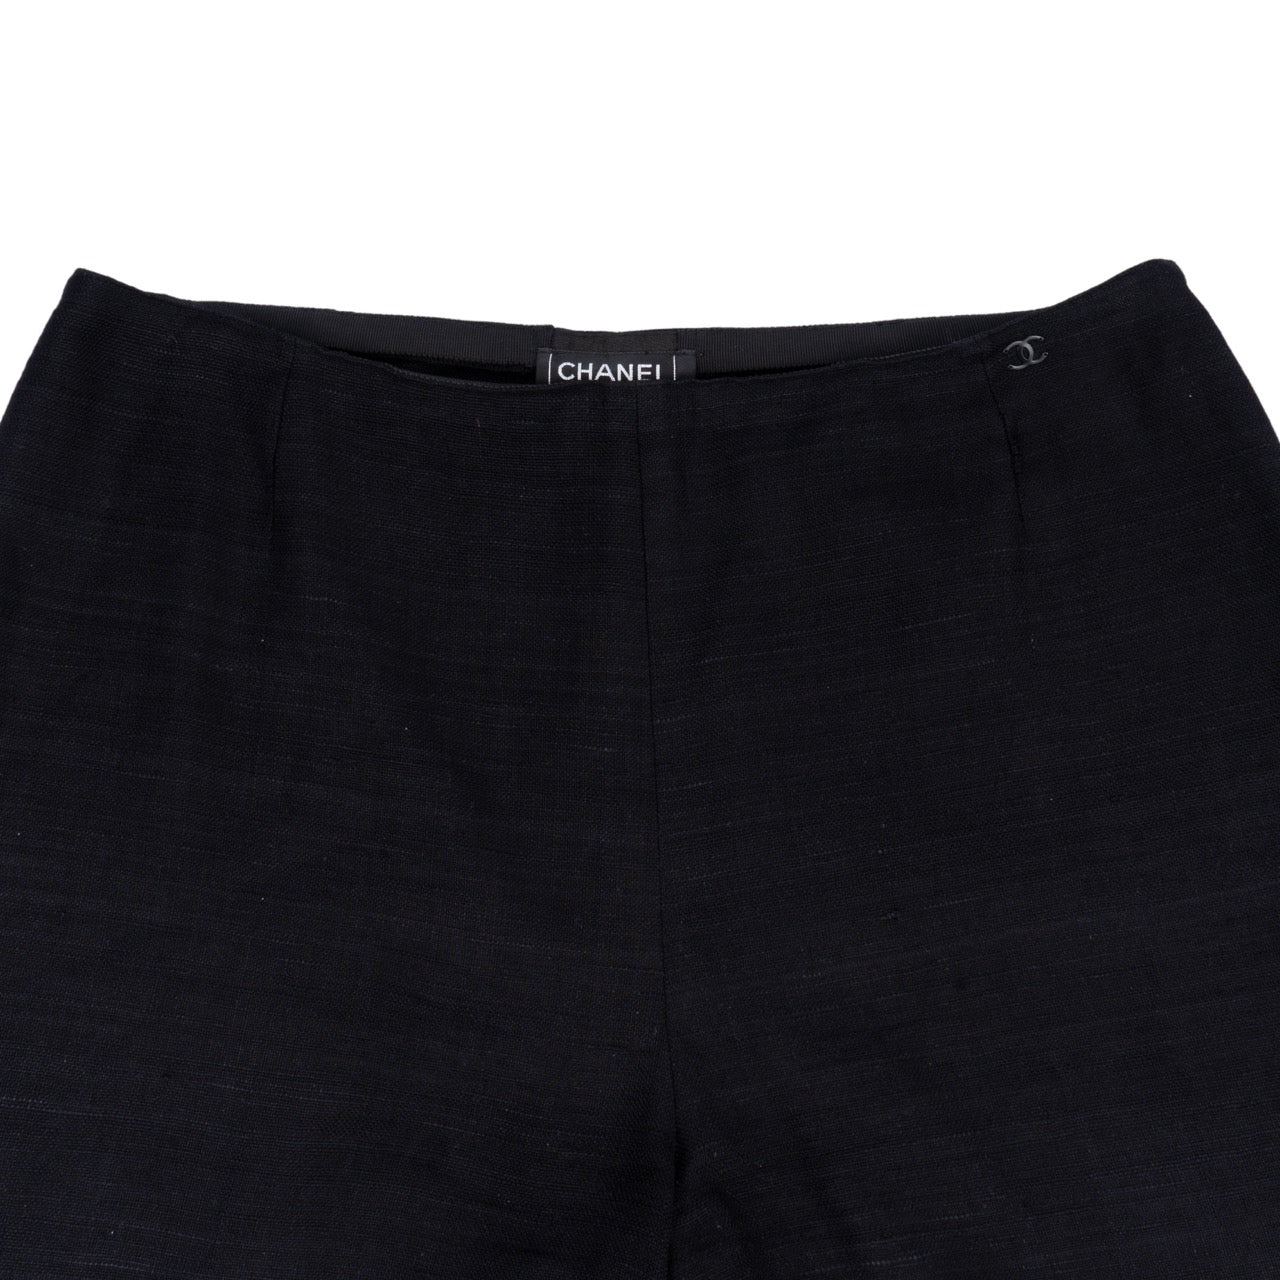 Chanel Light Silk Pants (40)